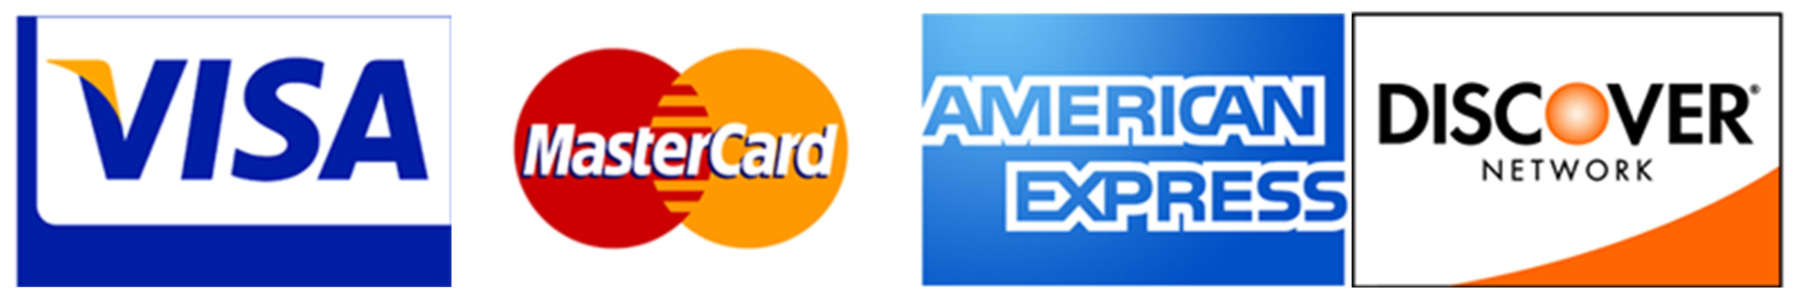 credit card images: visa mastercard american express discover